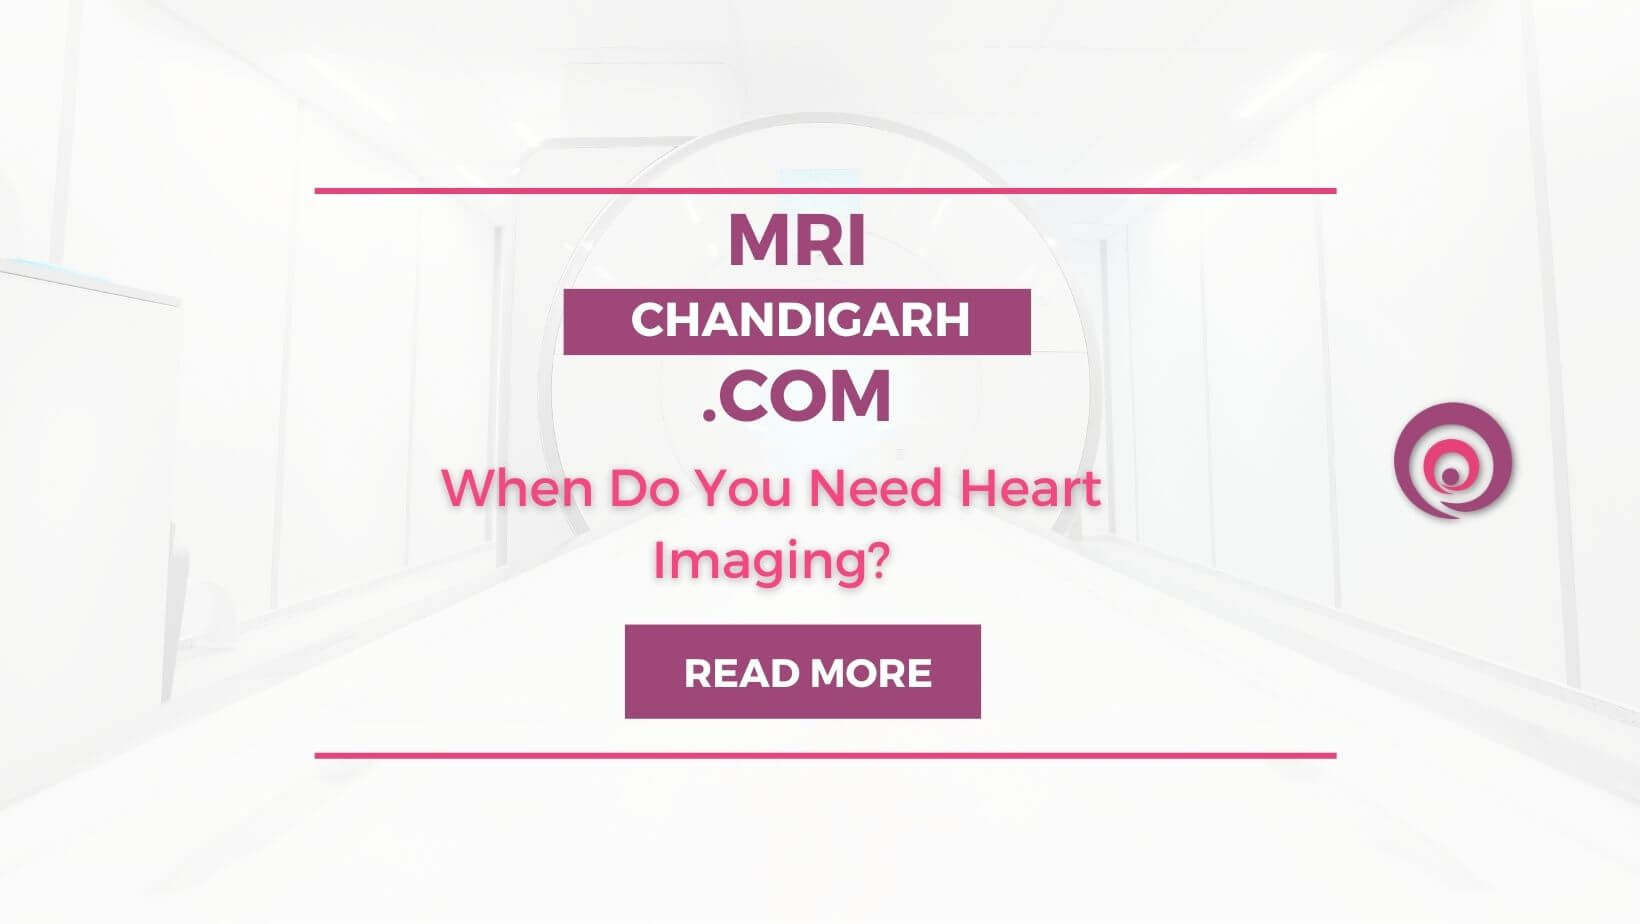 When Do You Need Heart Imaging?